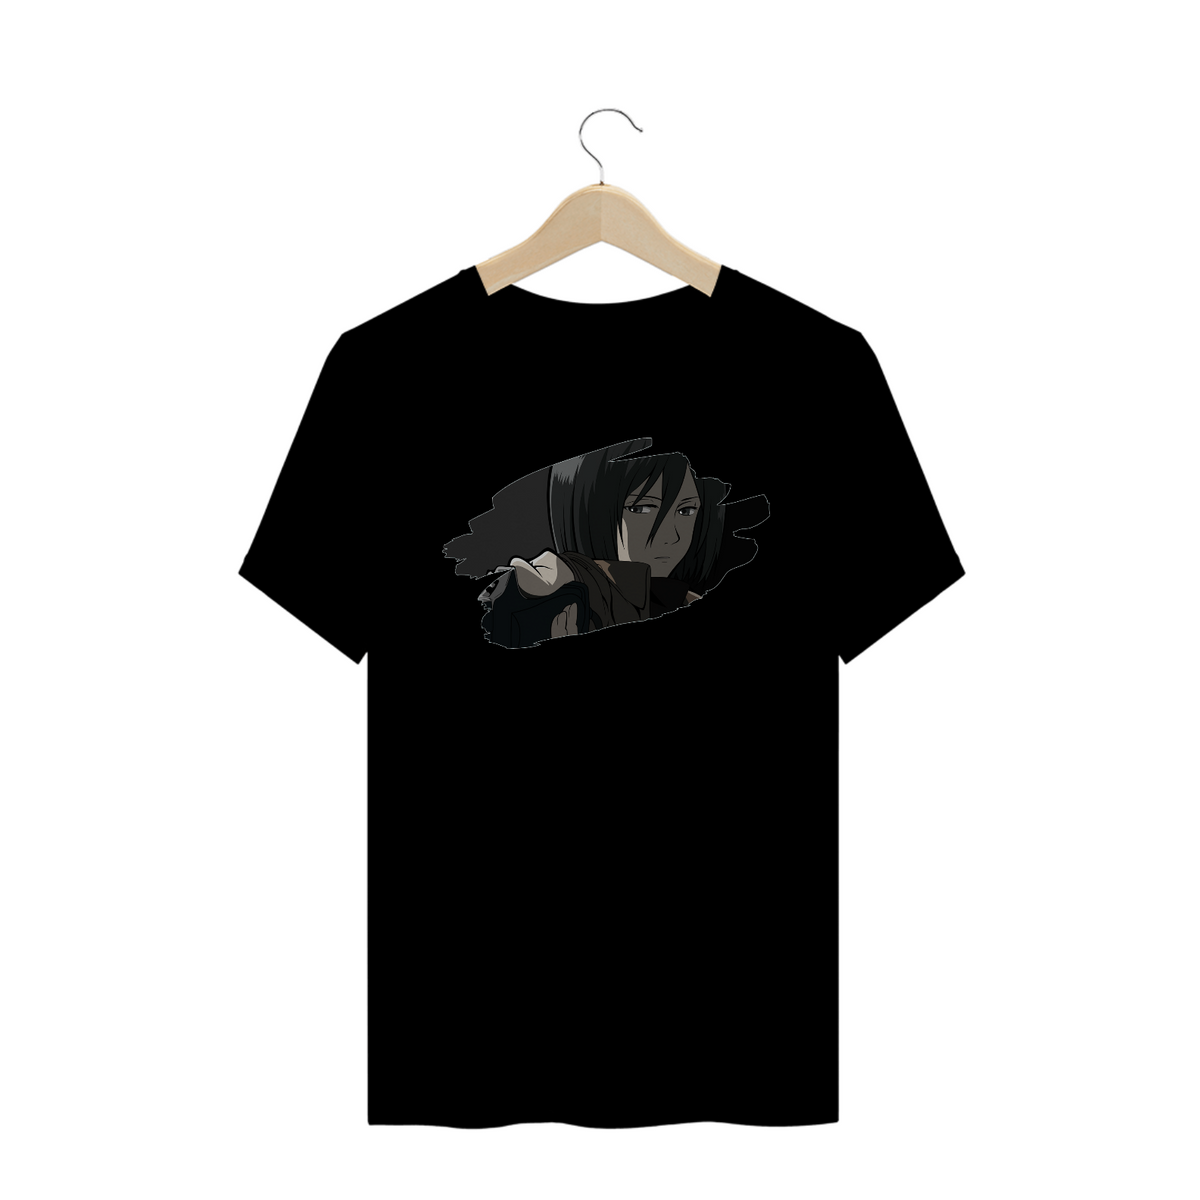 Nome do produto: T-Shirt Mikasa Ackerman (ATTACK ON TITAN)